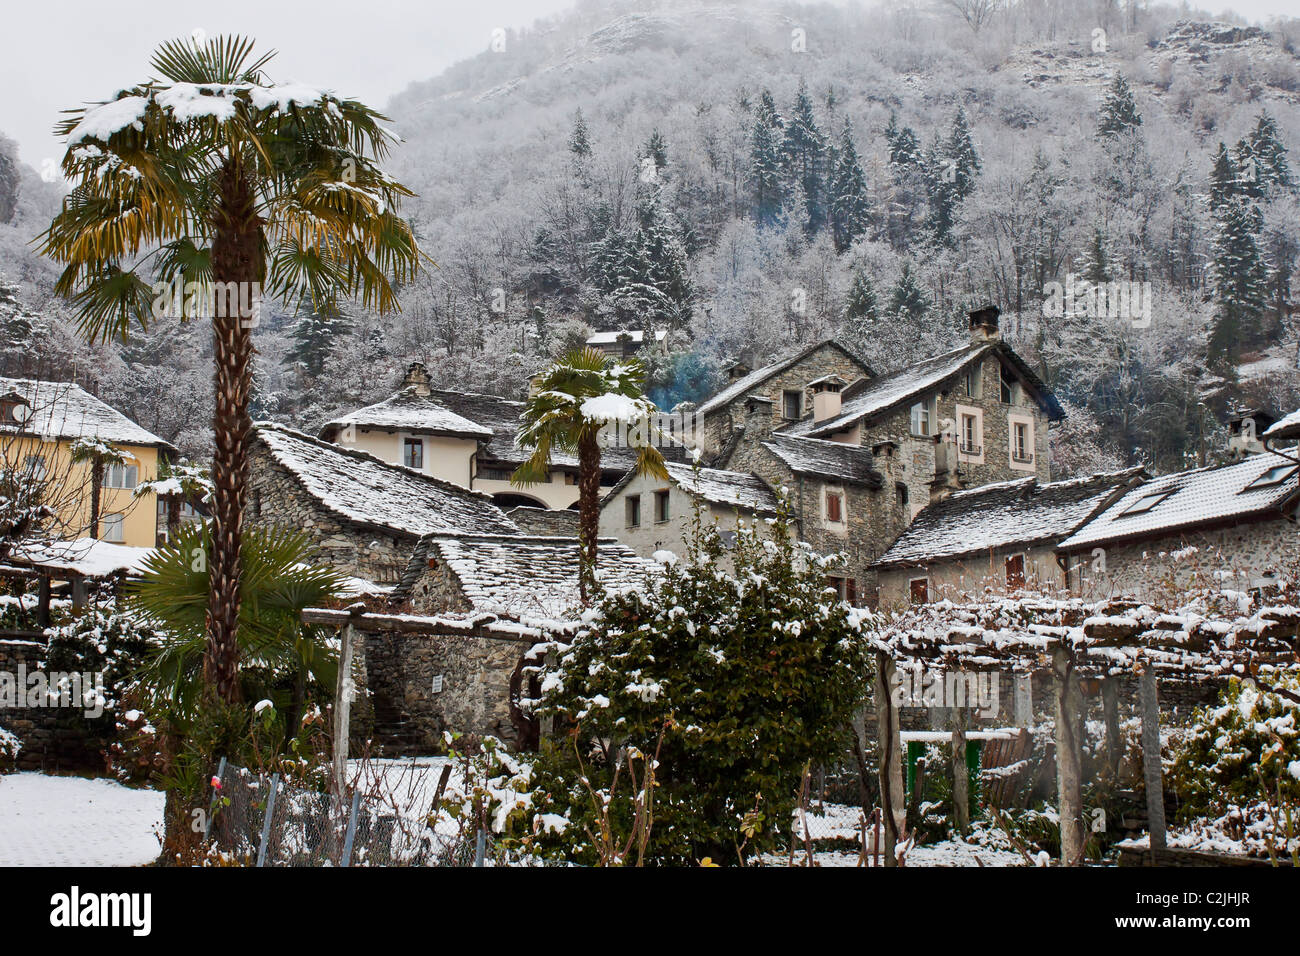 Verscio - a small village in Ticino, Pedemonte, Switzerland, in the winter with snow Stock Photo